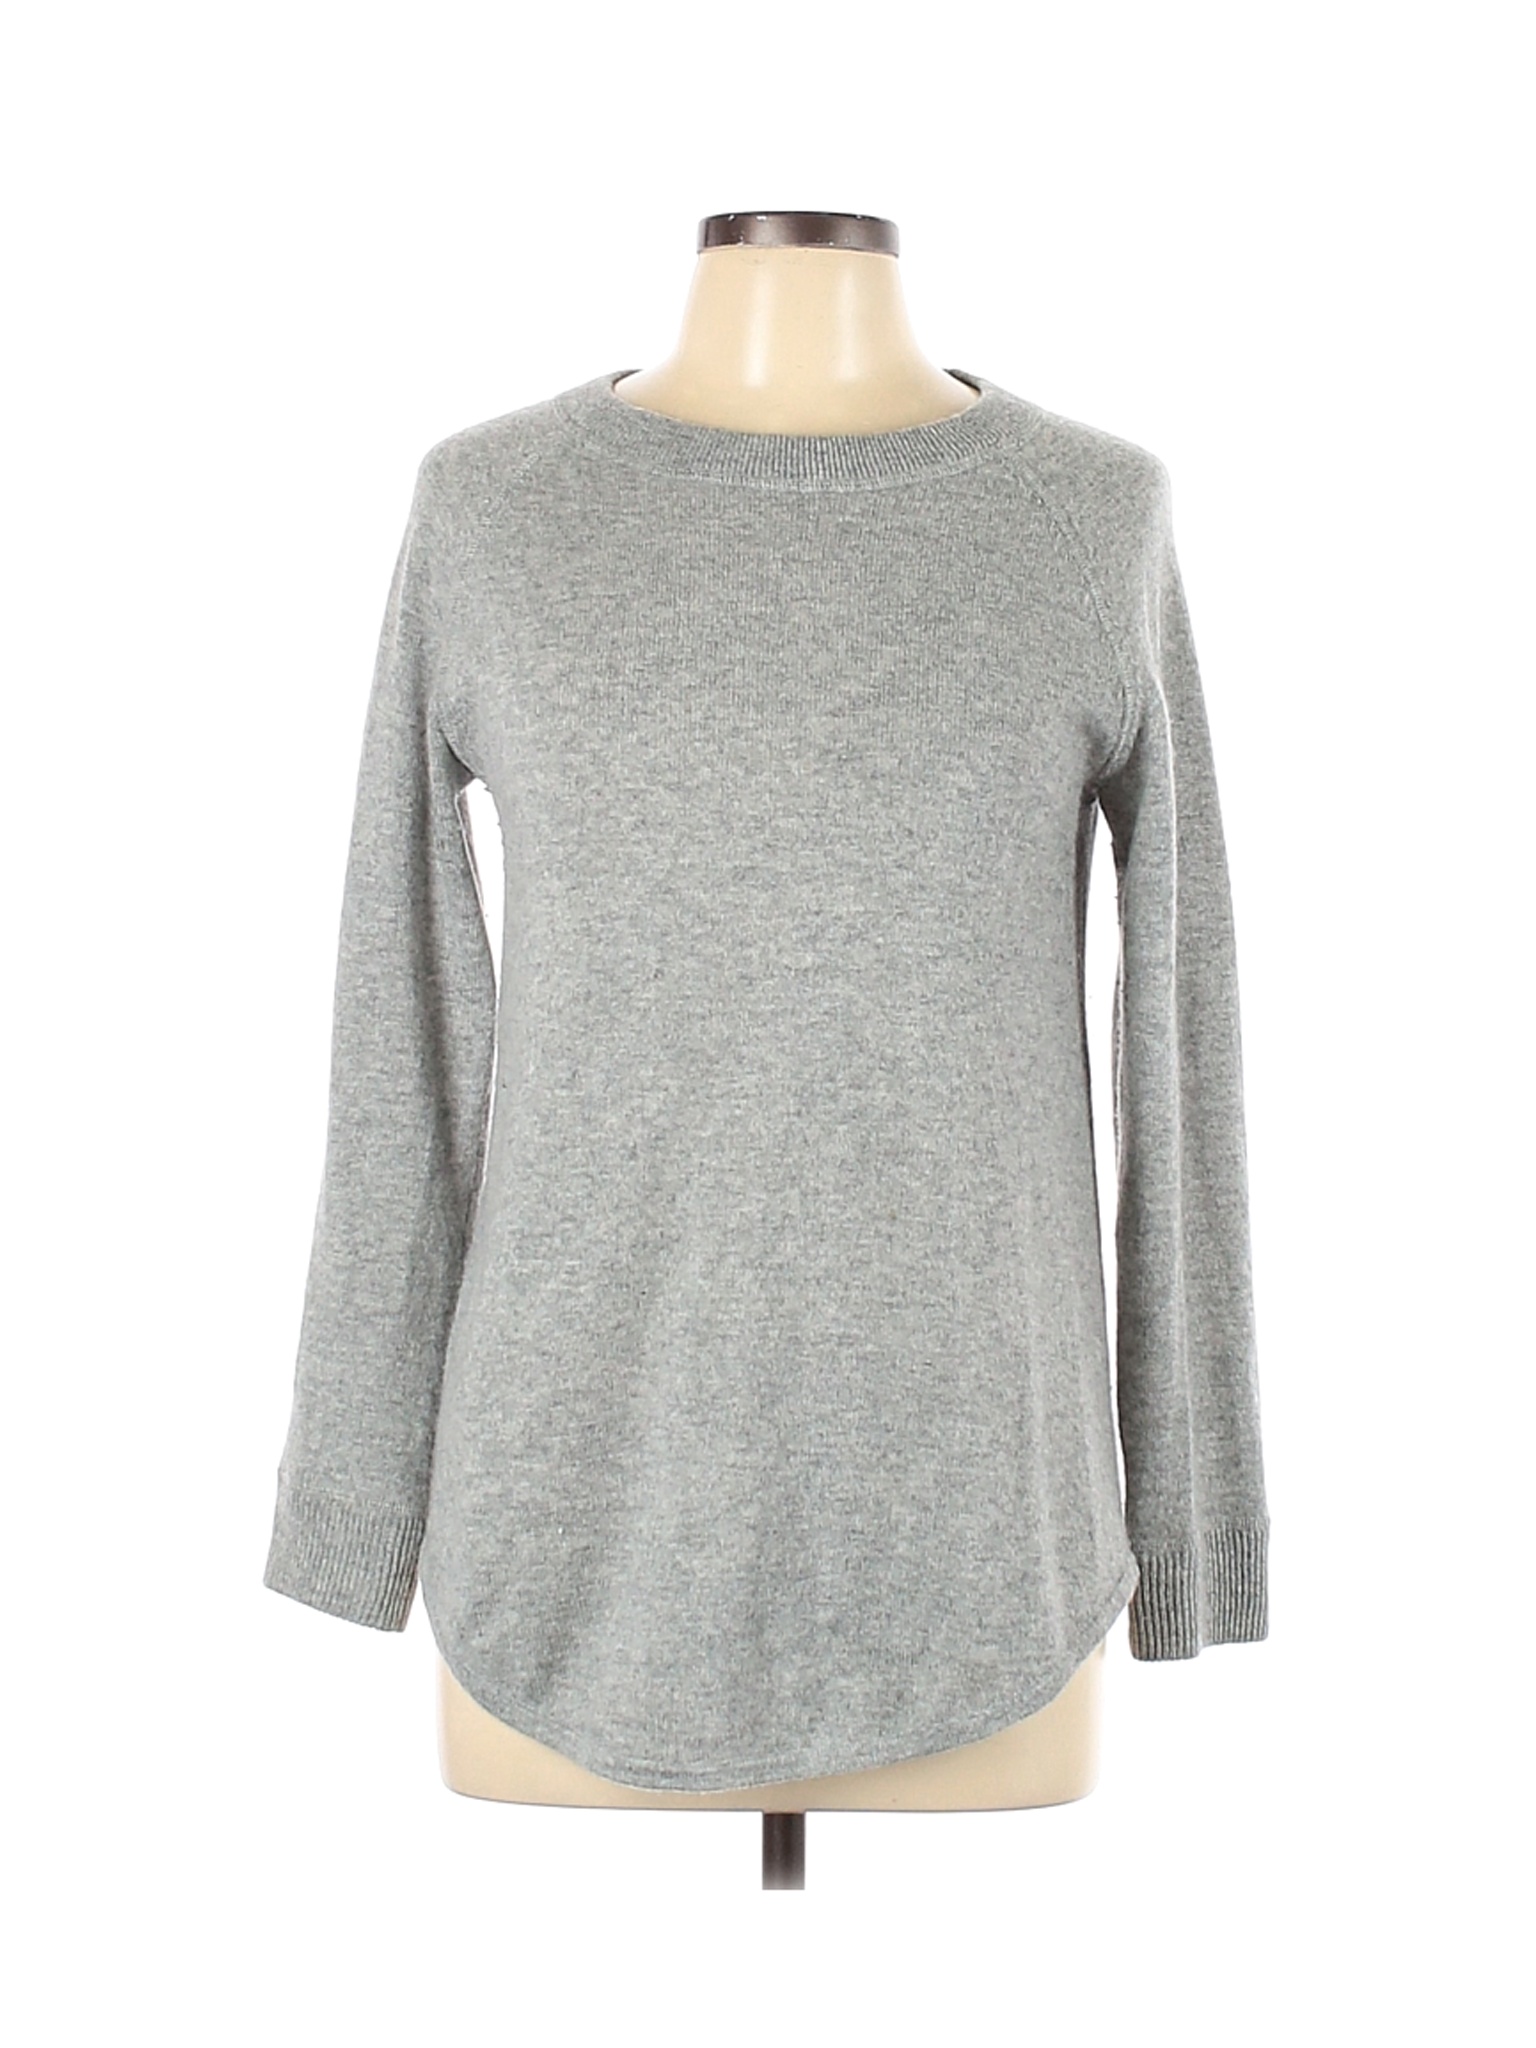 Philosophy Women Gray Pullover Sweater L | eBay